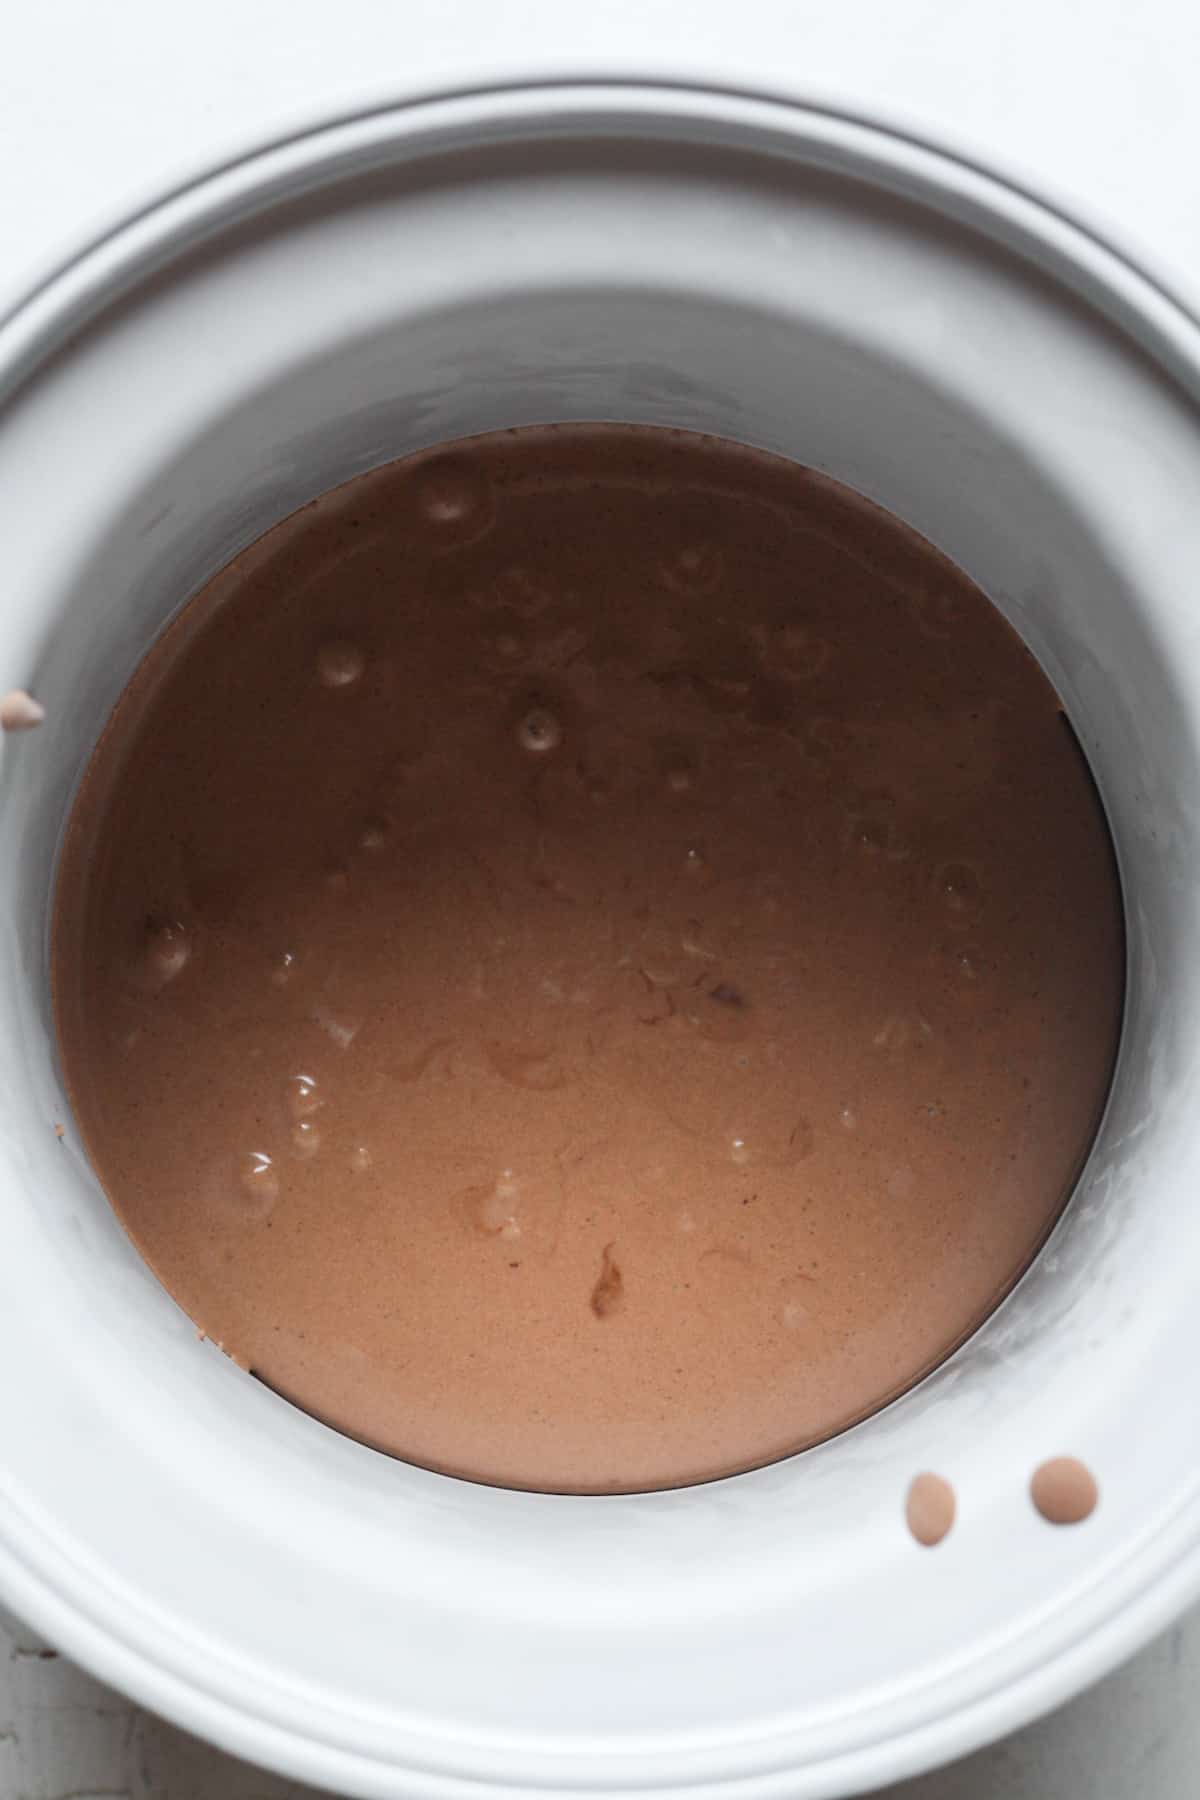 Creamy chocolate ice cream bowl.